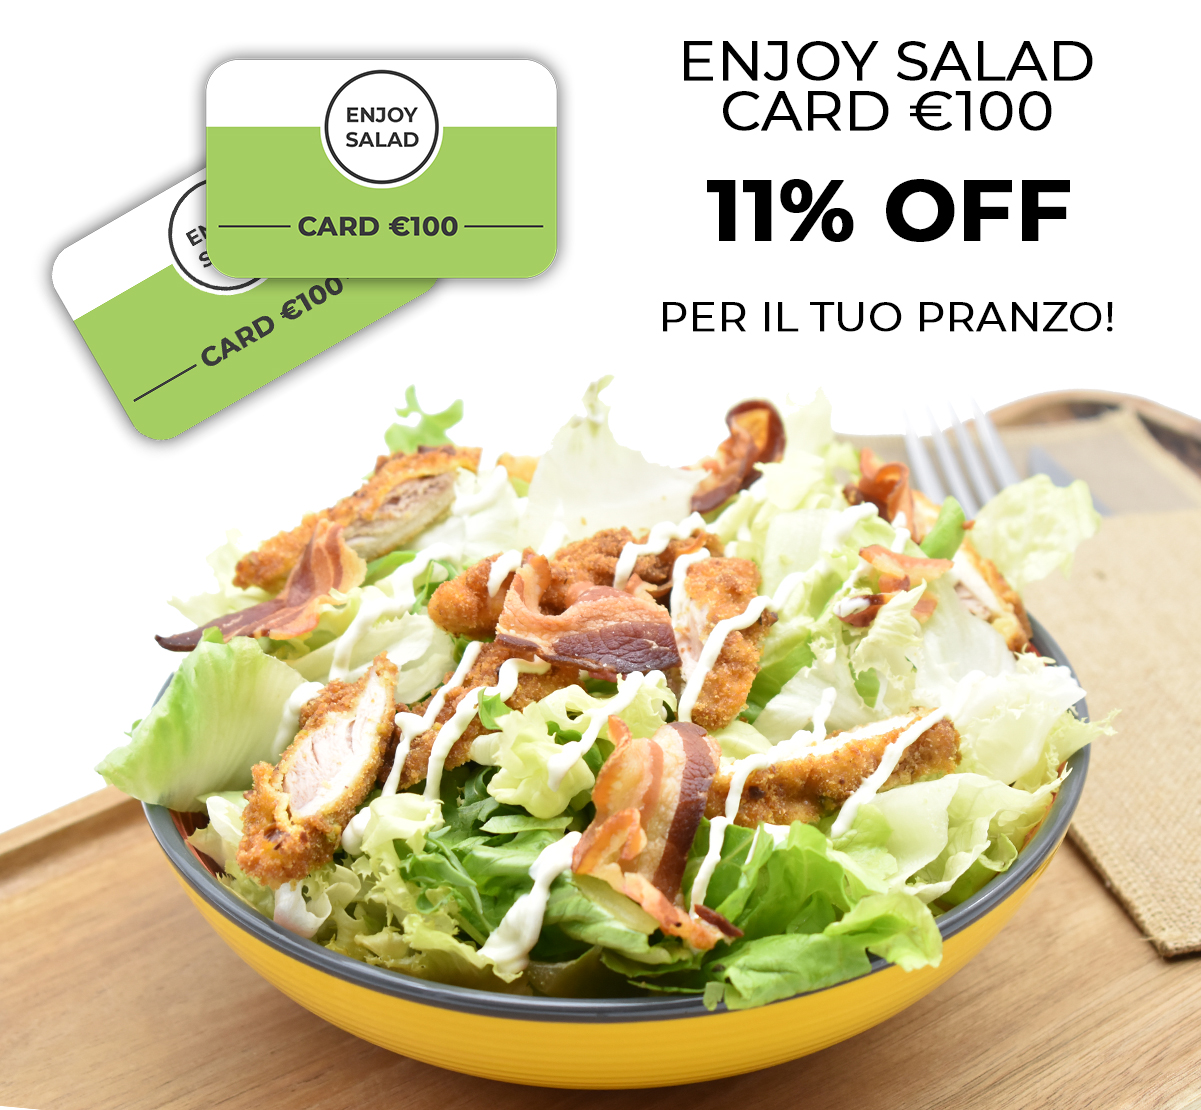 Enjoy Salad CARD €100 - Enjoy Salad